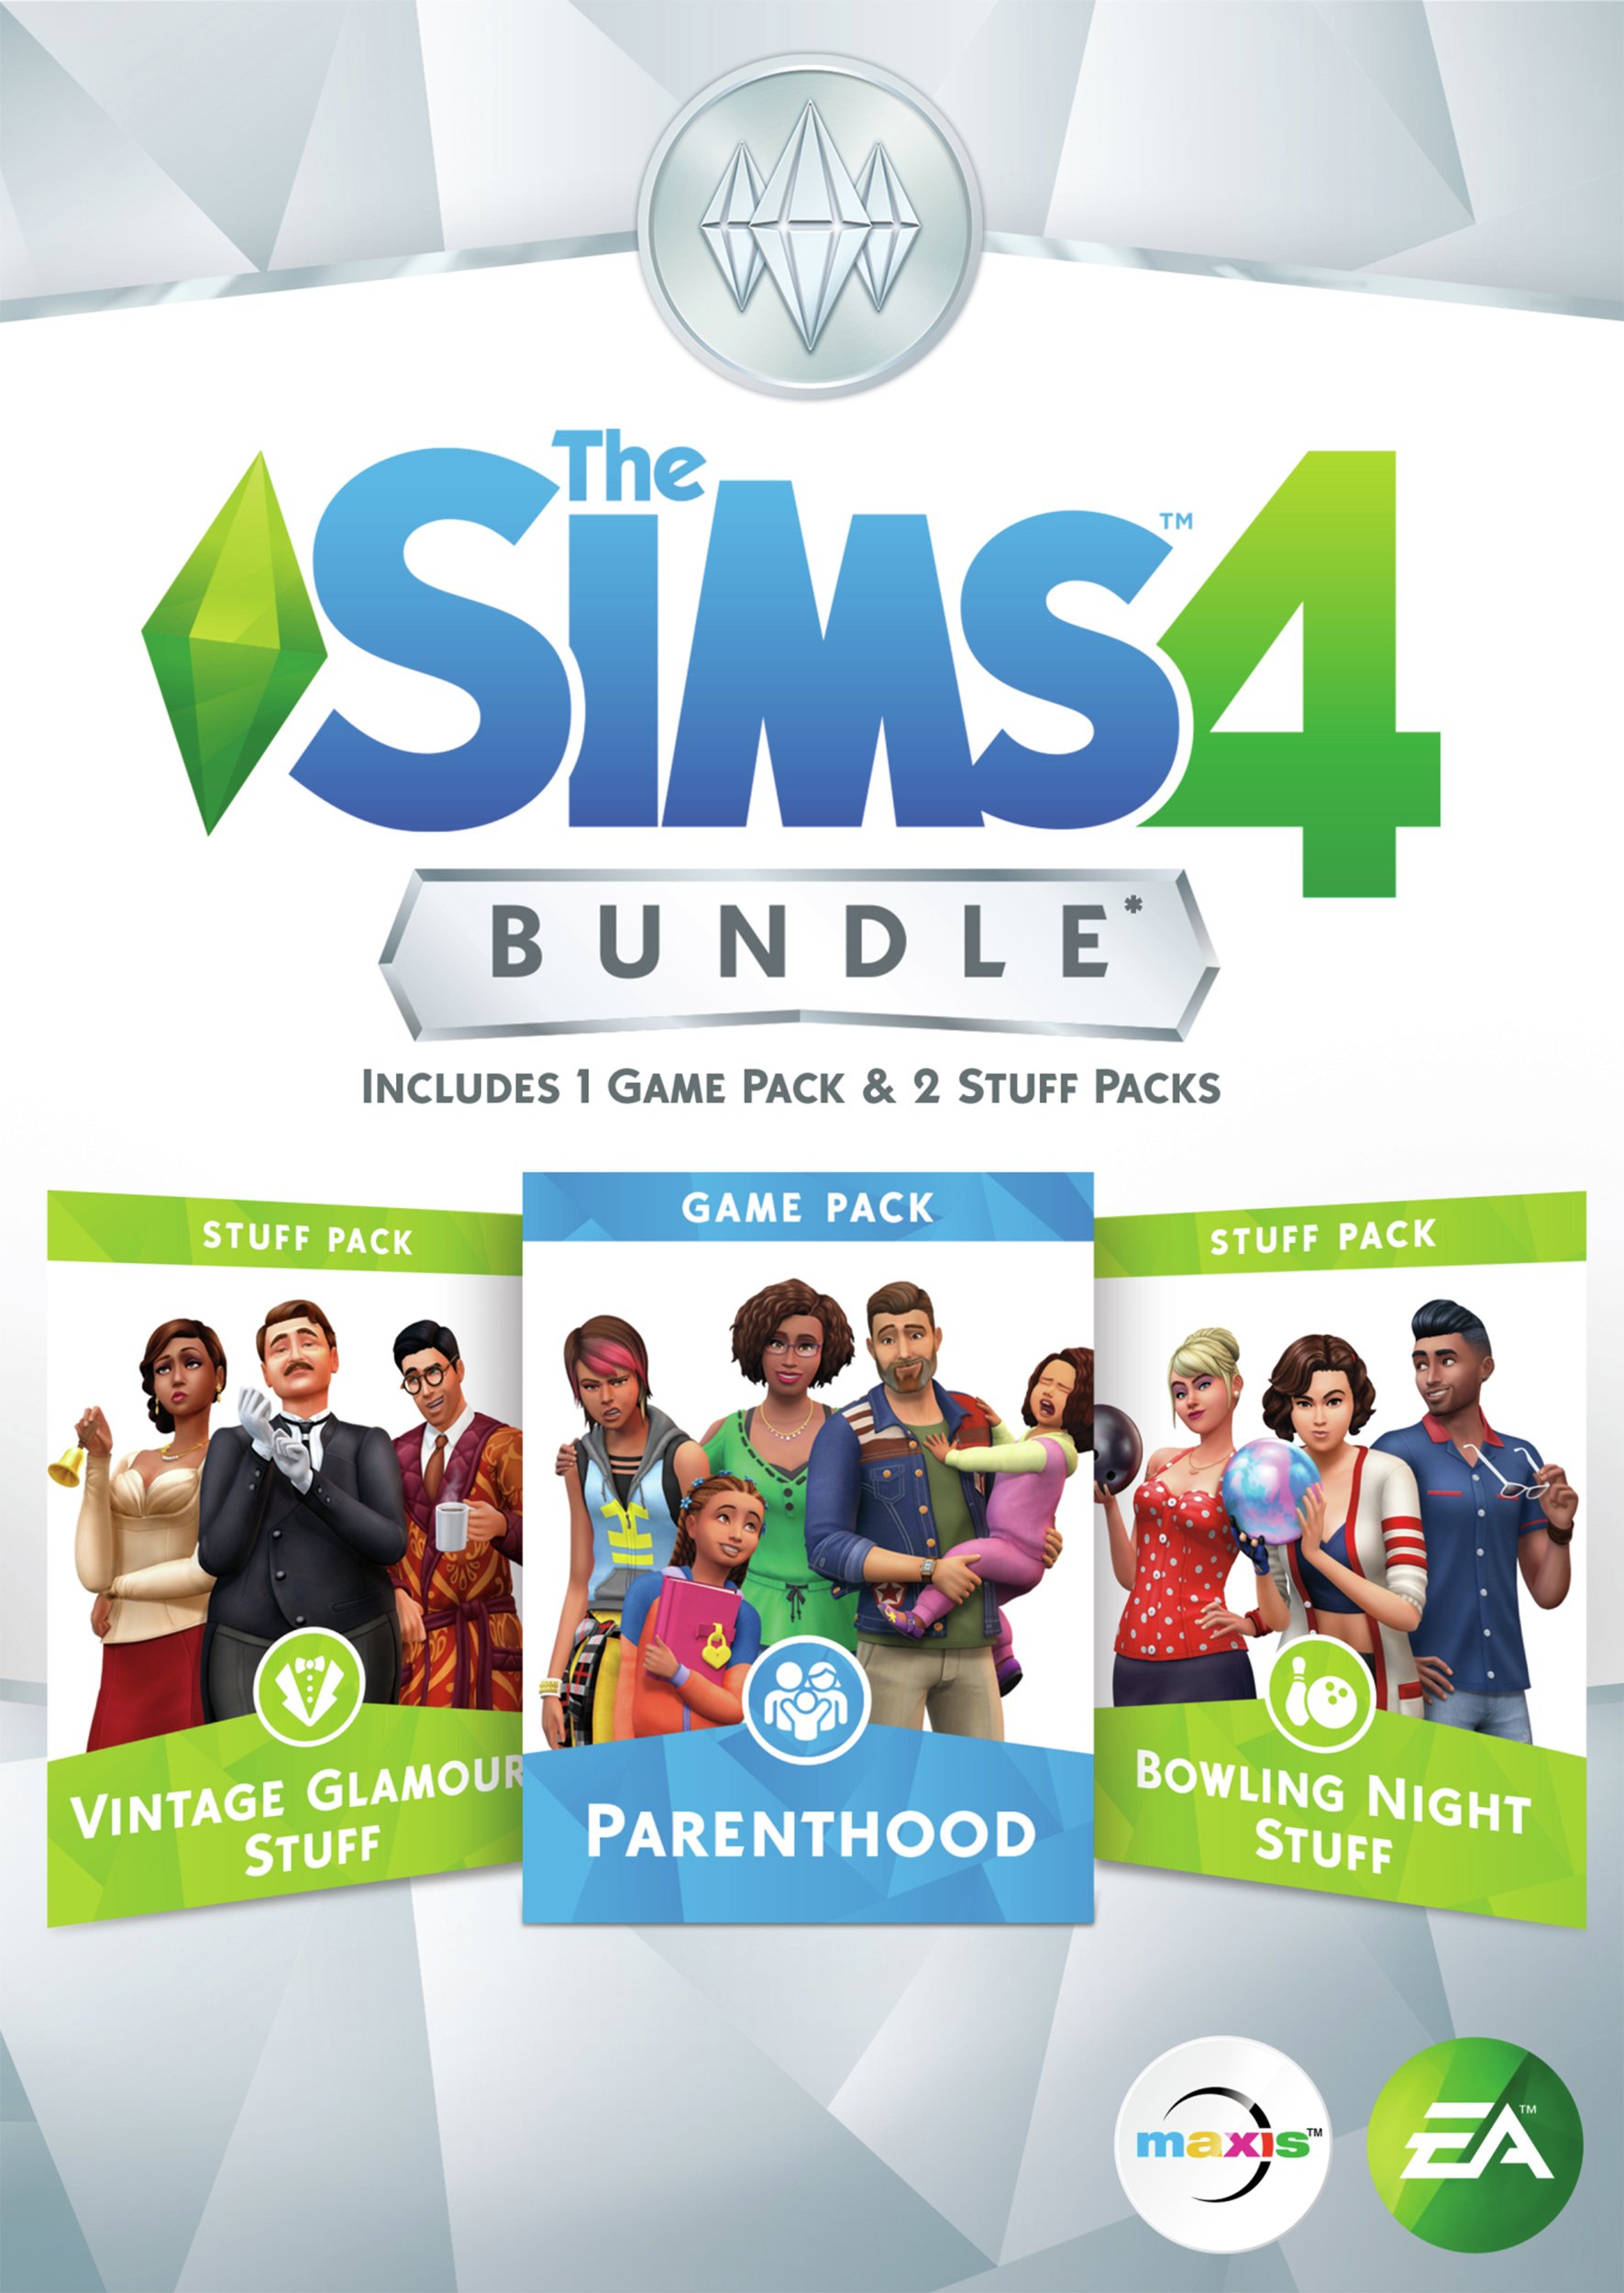 The Sims 4 Bundle Pack: Parenthood PC Game Reviews